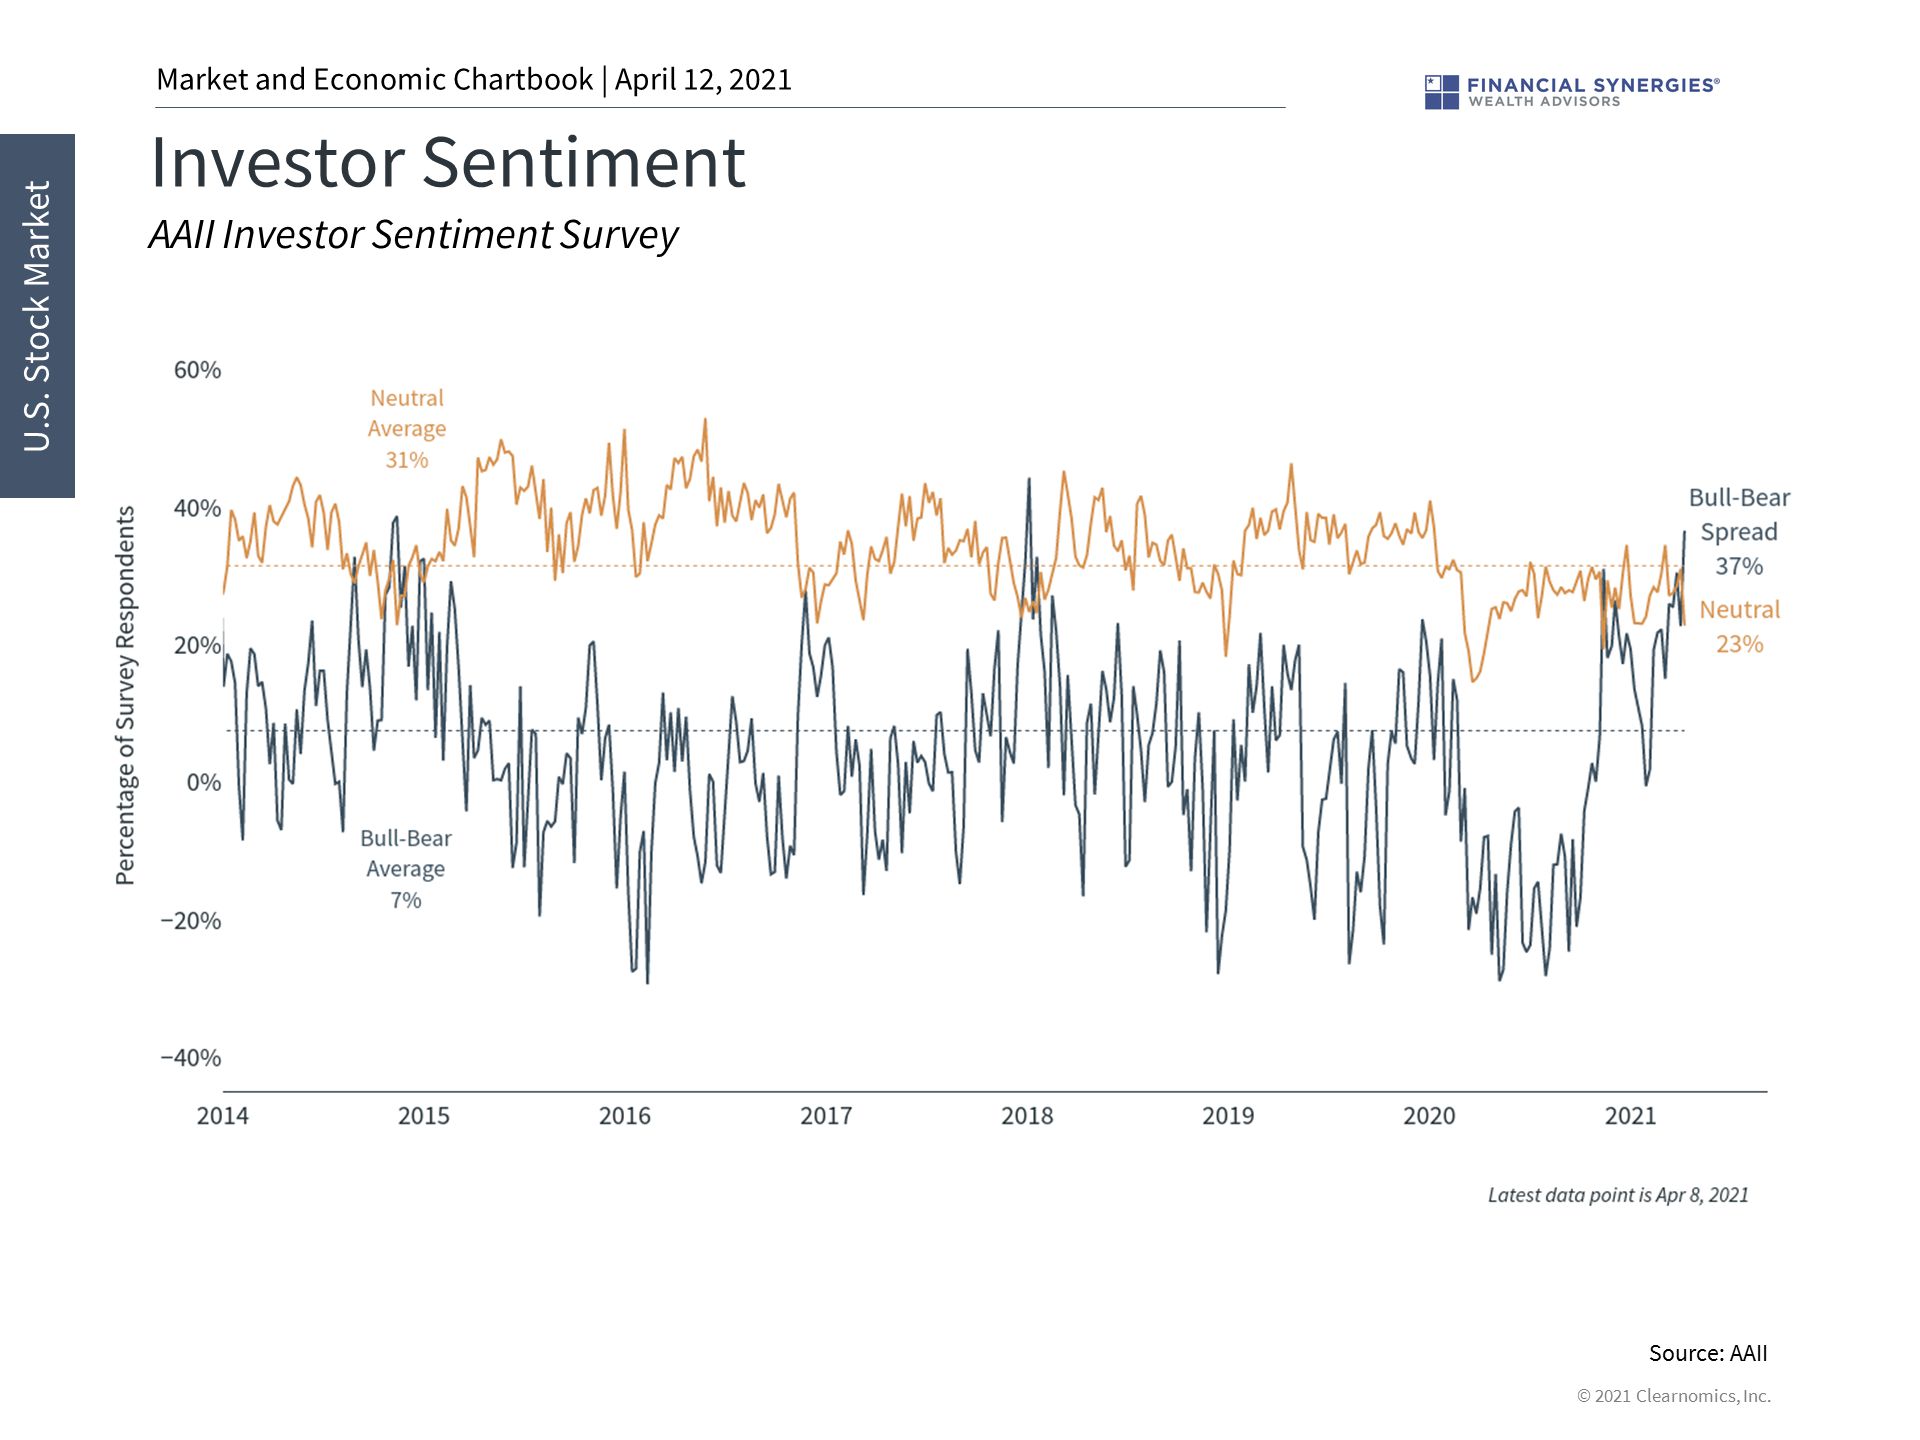 investor sentiment